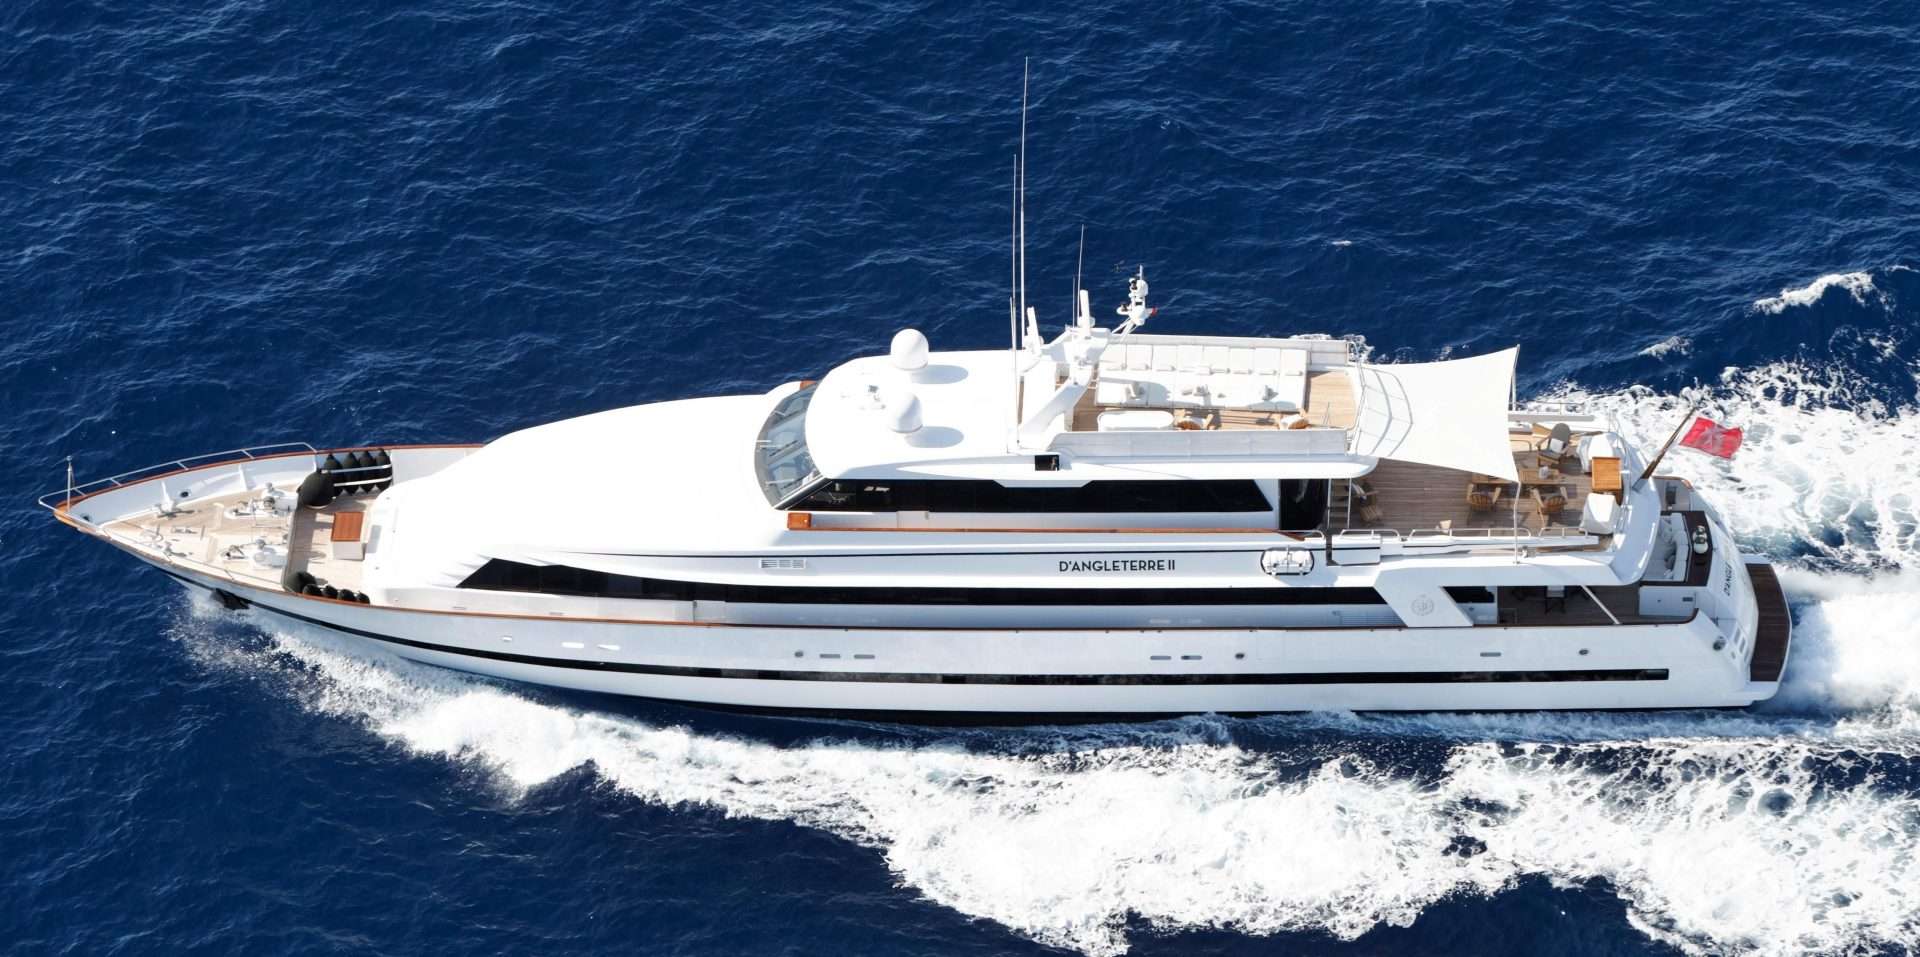 SEA LADY II - Yacht Charter El Rompido & Boat hire in W. Med -Naples/Sicily, W. Med -Riviera/Cors/Sard., W. Med - Spain/Balearics 1